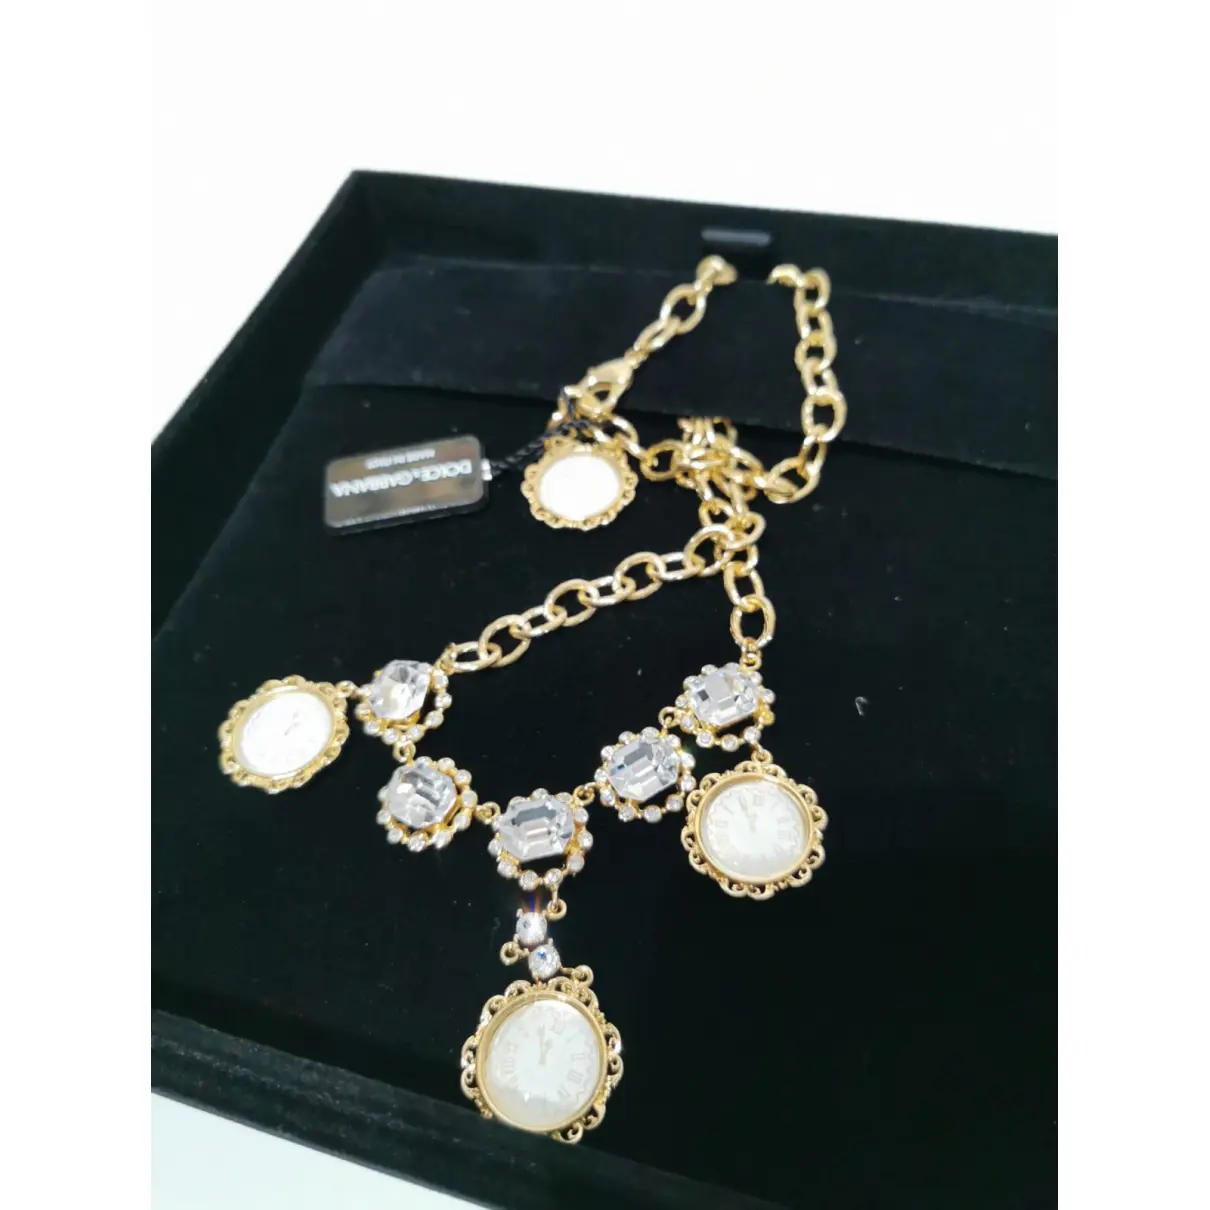 Buy Dolce & Gabbana Necklace online